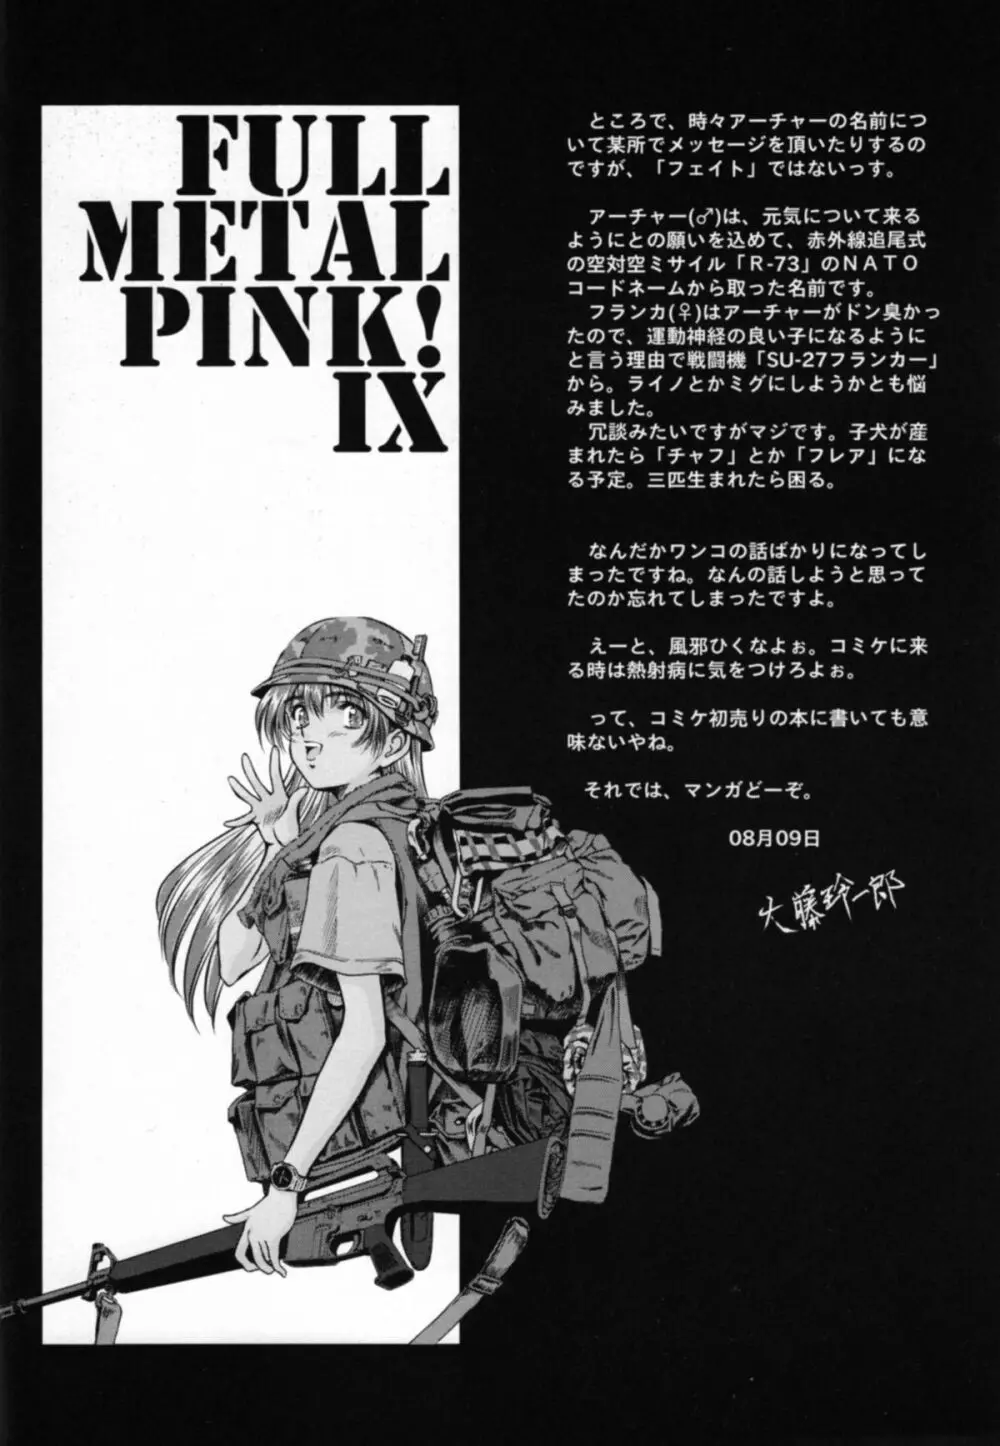 Full Metal Pink! IX 5ページ